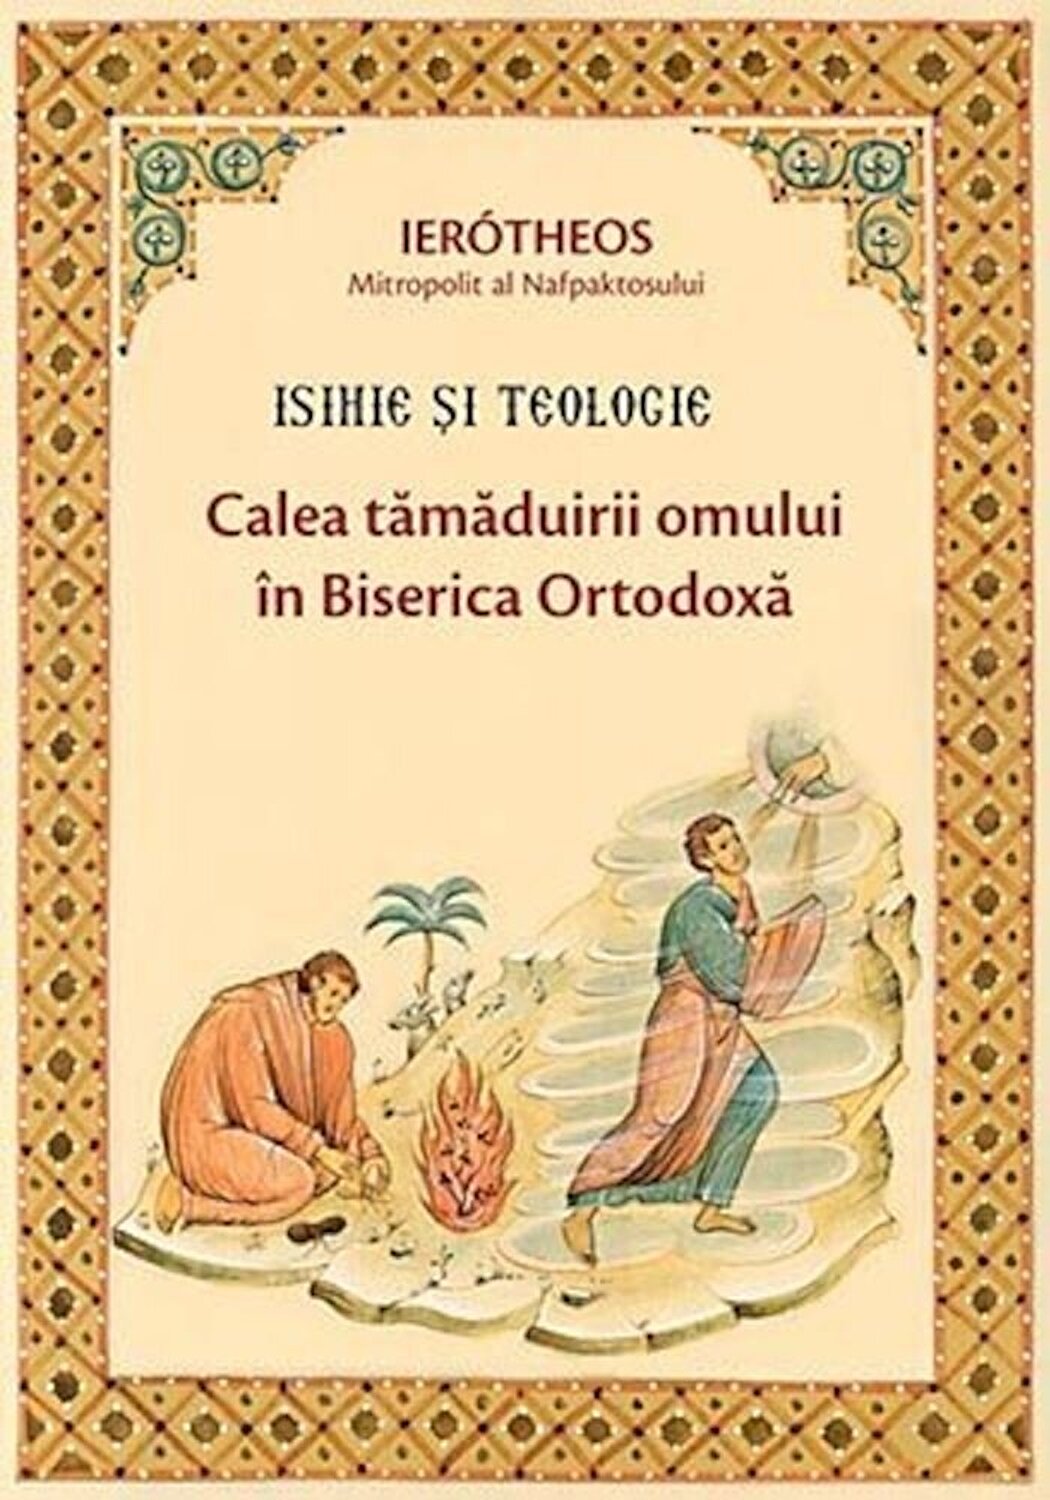 Isihie si teologie | Ierotheos al Nafpaktosului carturesti.ro poza bestsellers.ro